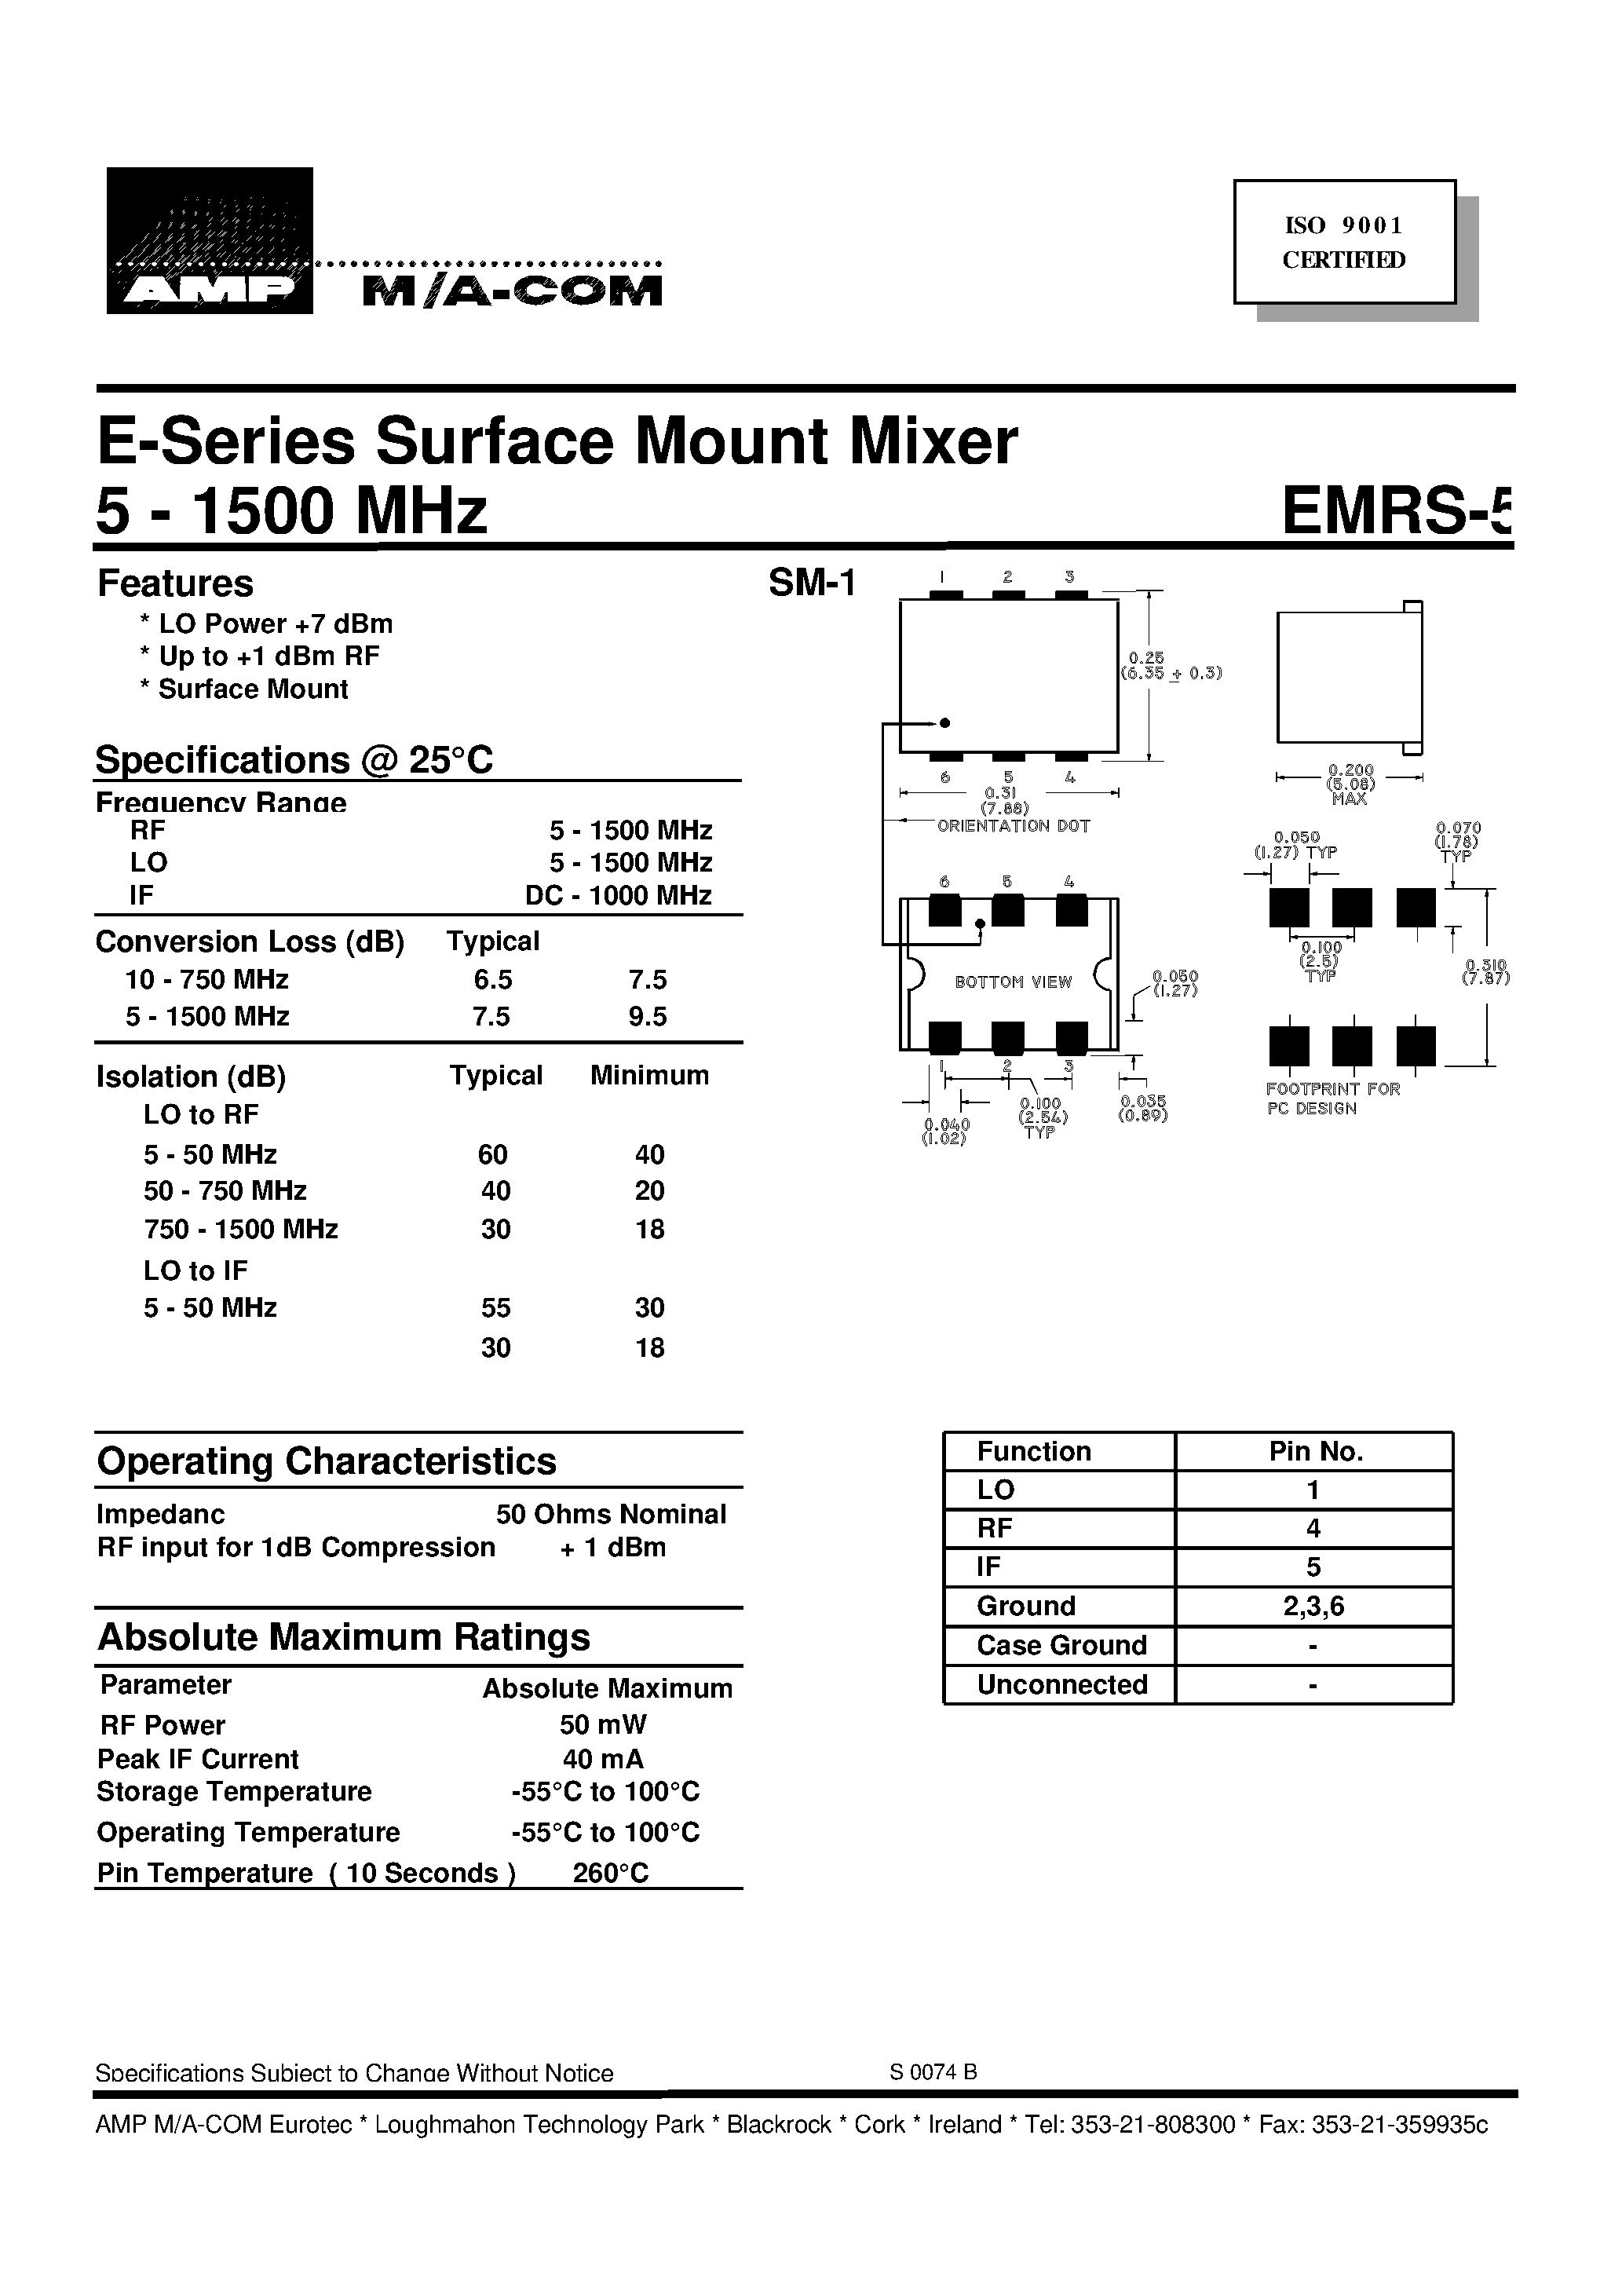 Datasheet EMRS-5 - 5 - 1500 MHz E-Series Surface Mount Mixer page 1